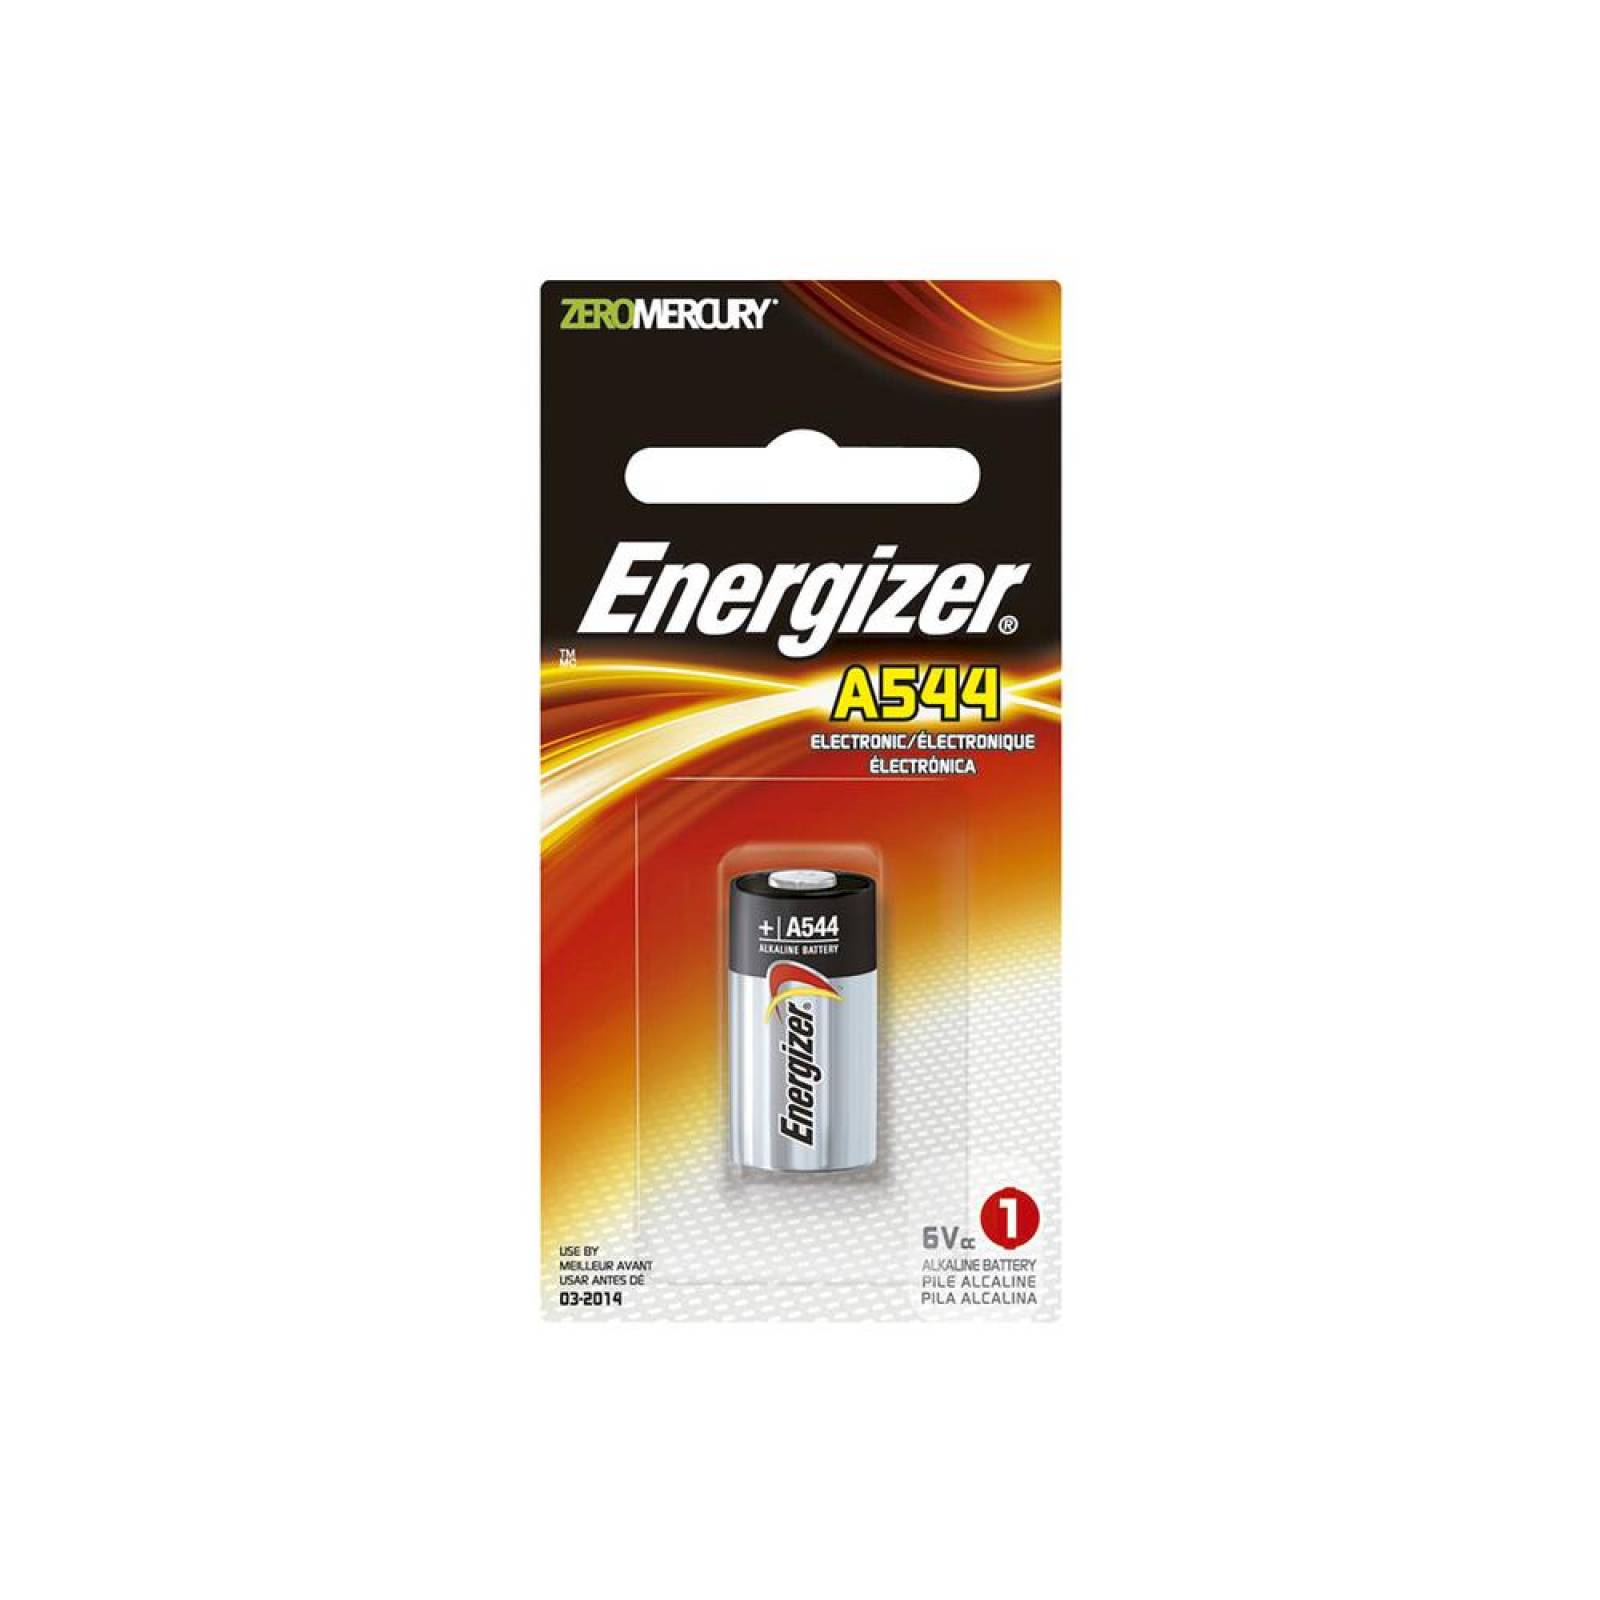 Pila Energizer Alcalina 6v A544 4lr44 px28a 476a Blister 